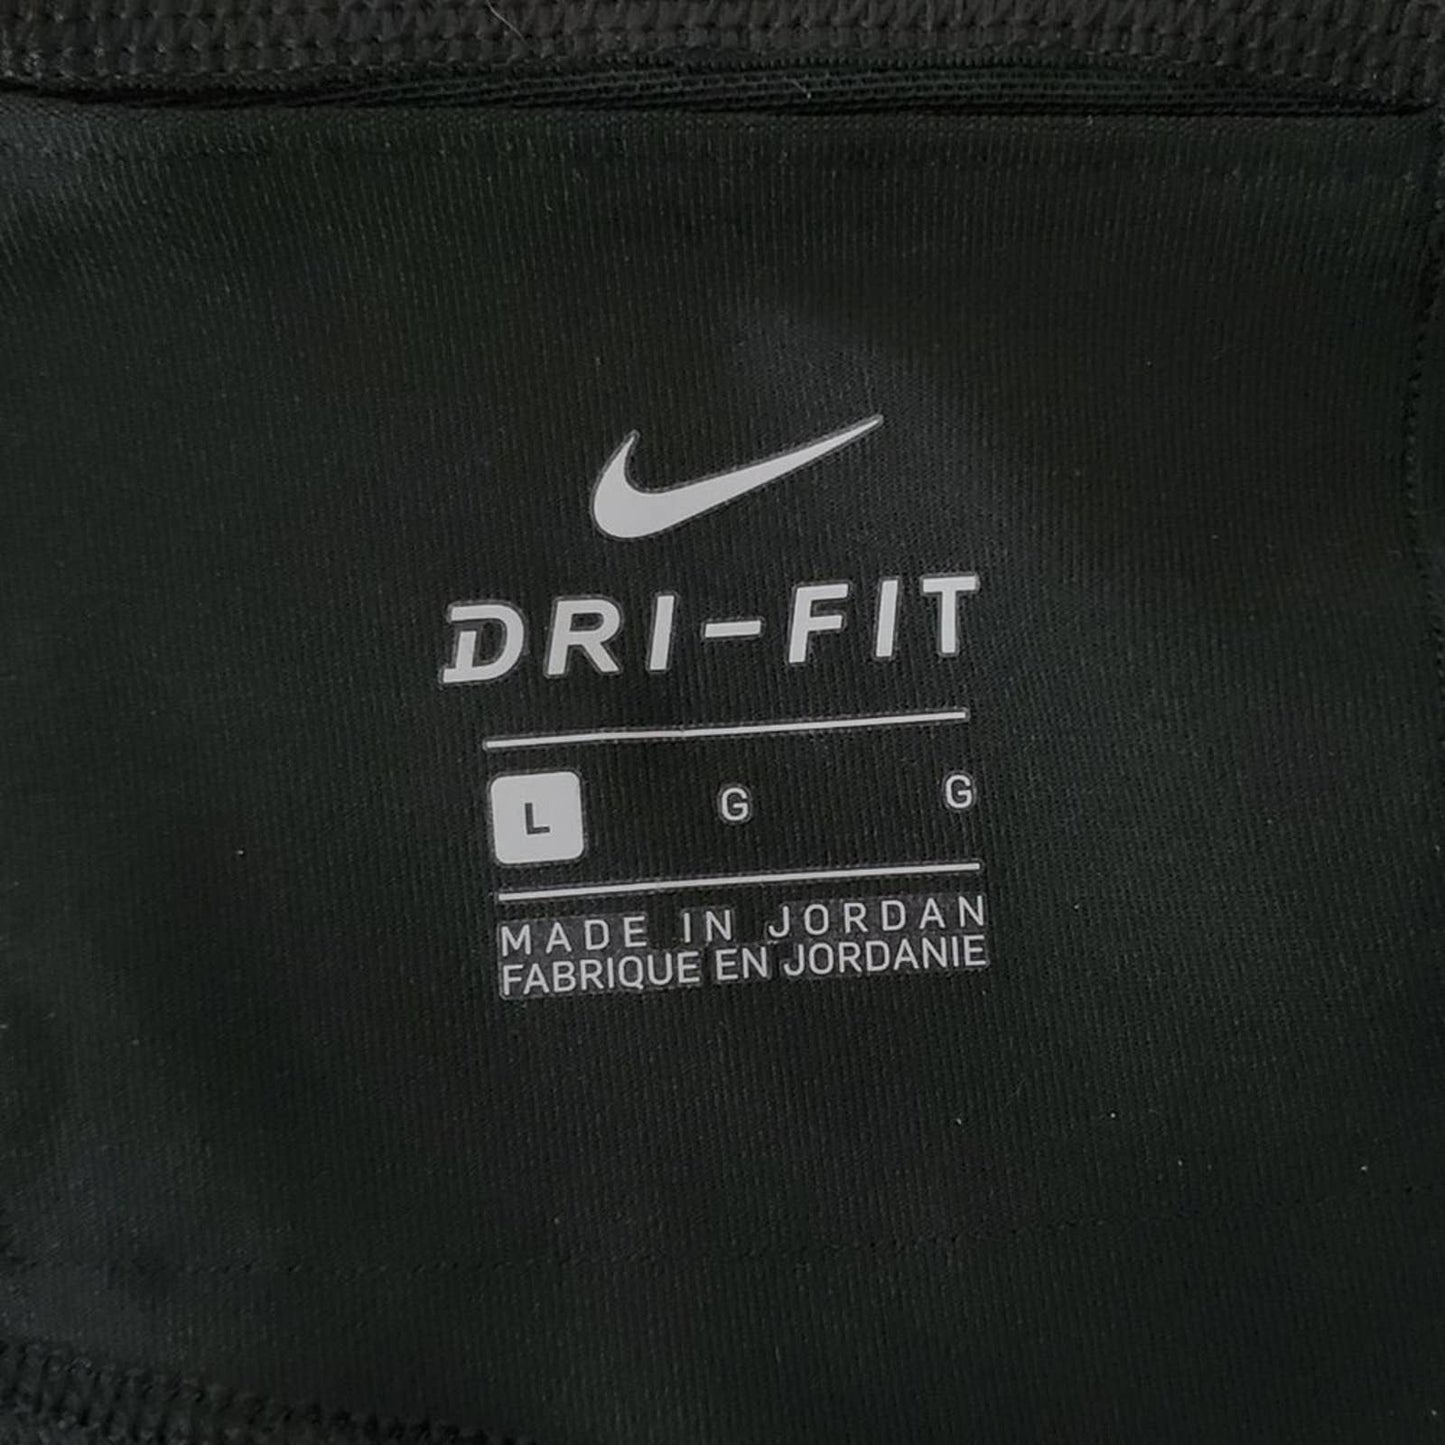 Nike Dri-Fit Cropeed Black Leggings - L